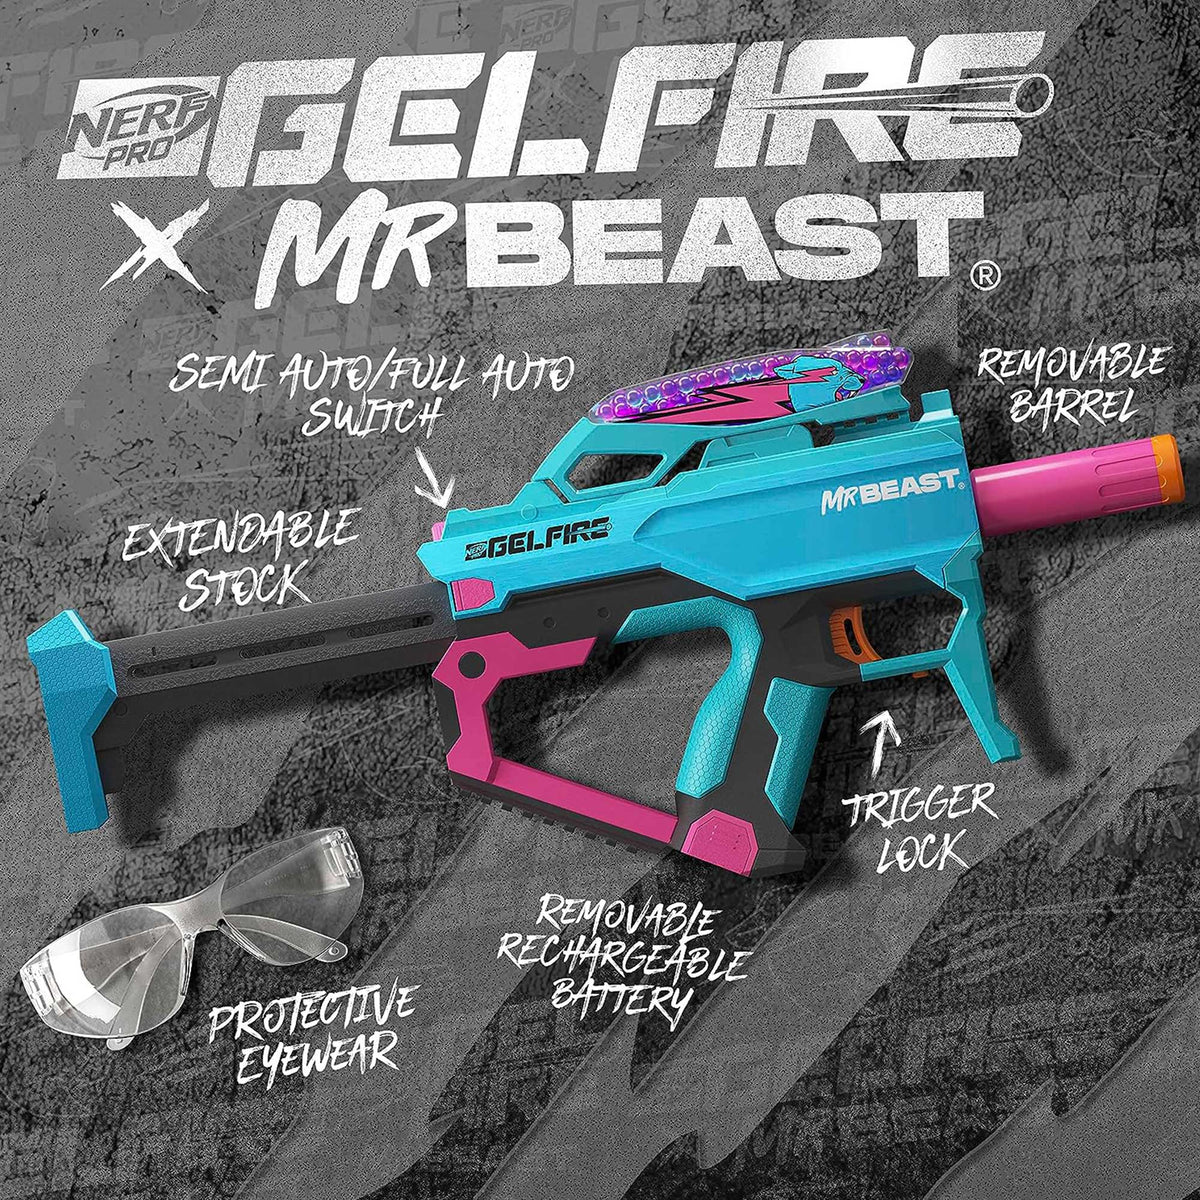 NERF Pro Gelfire Mythic Blaster x Mr Beast